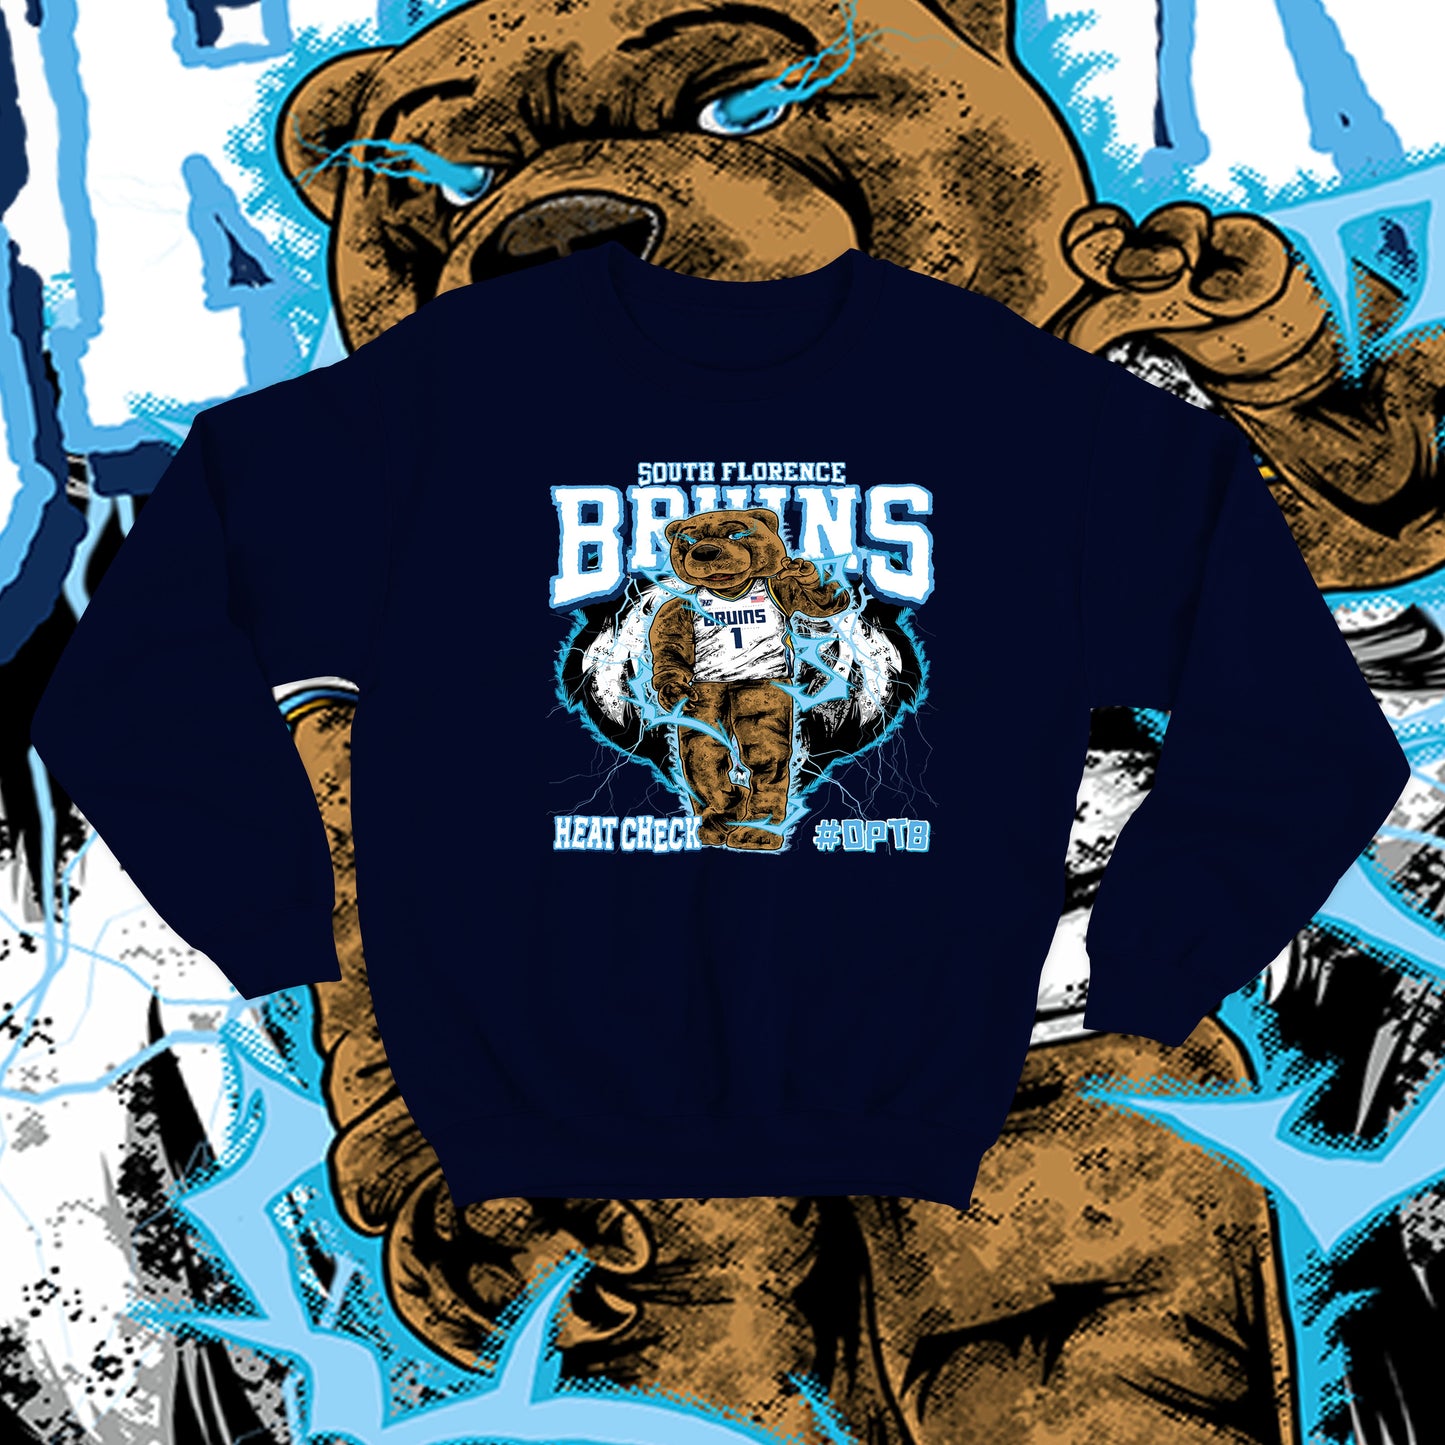 Bruins "We Like That" (Basketball) - Crewneck Sweatshirt-DaPrintFactory